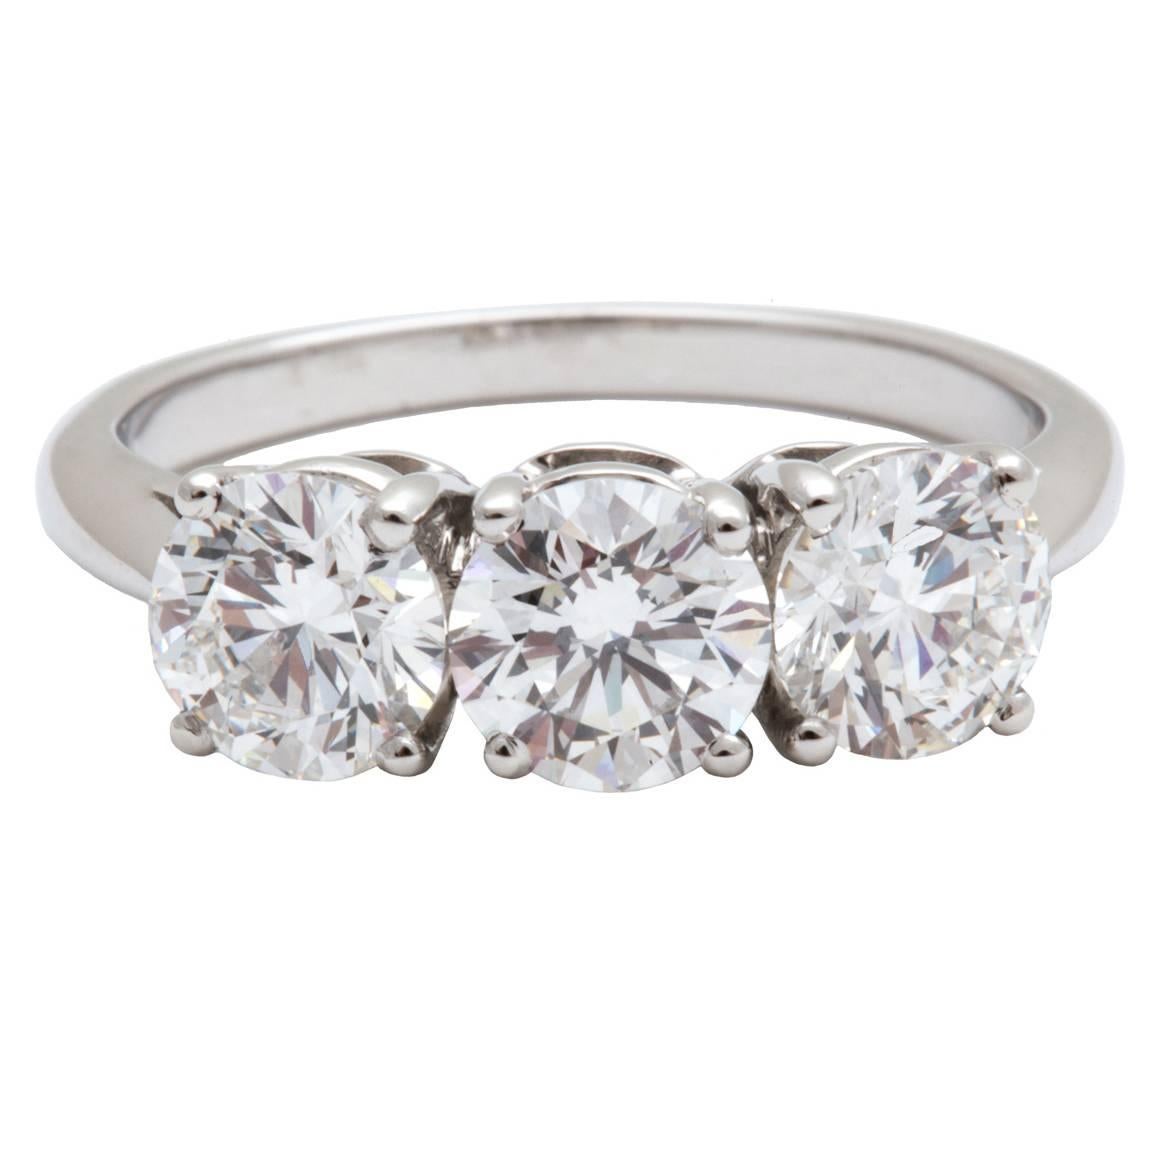  Tiffany & Co Three Stone Diamond Platinum Ring 2.41 carats